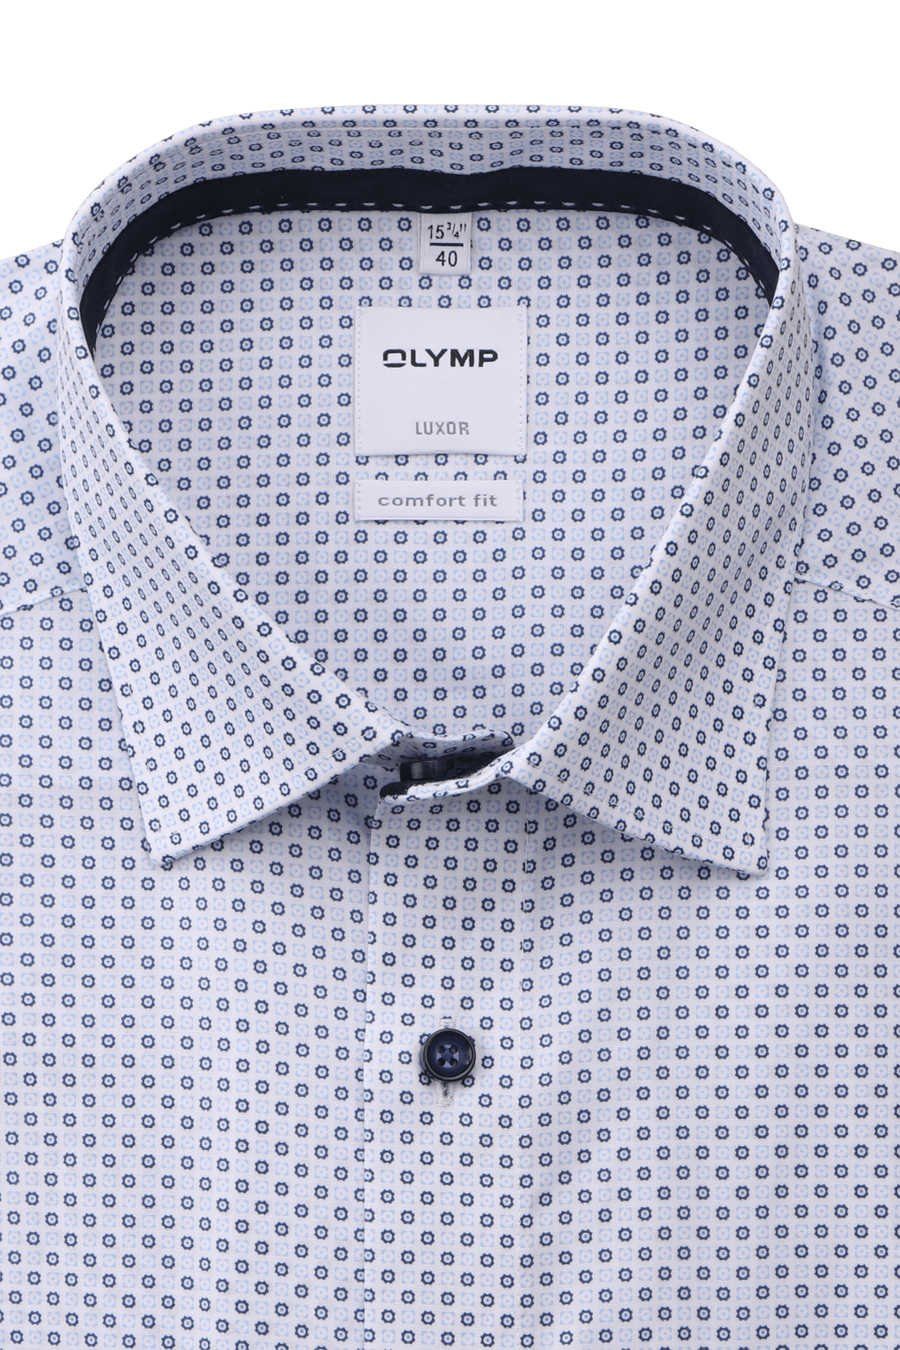 Herren Hemden OLYMP Businesshemd OLYMP Luxor comfort fit